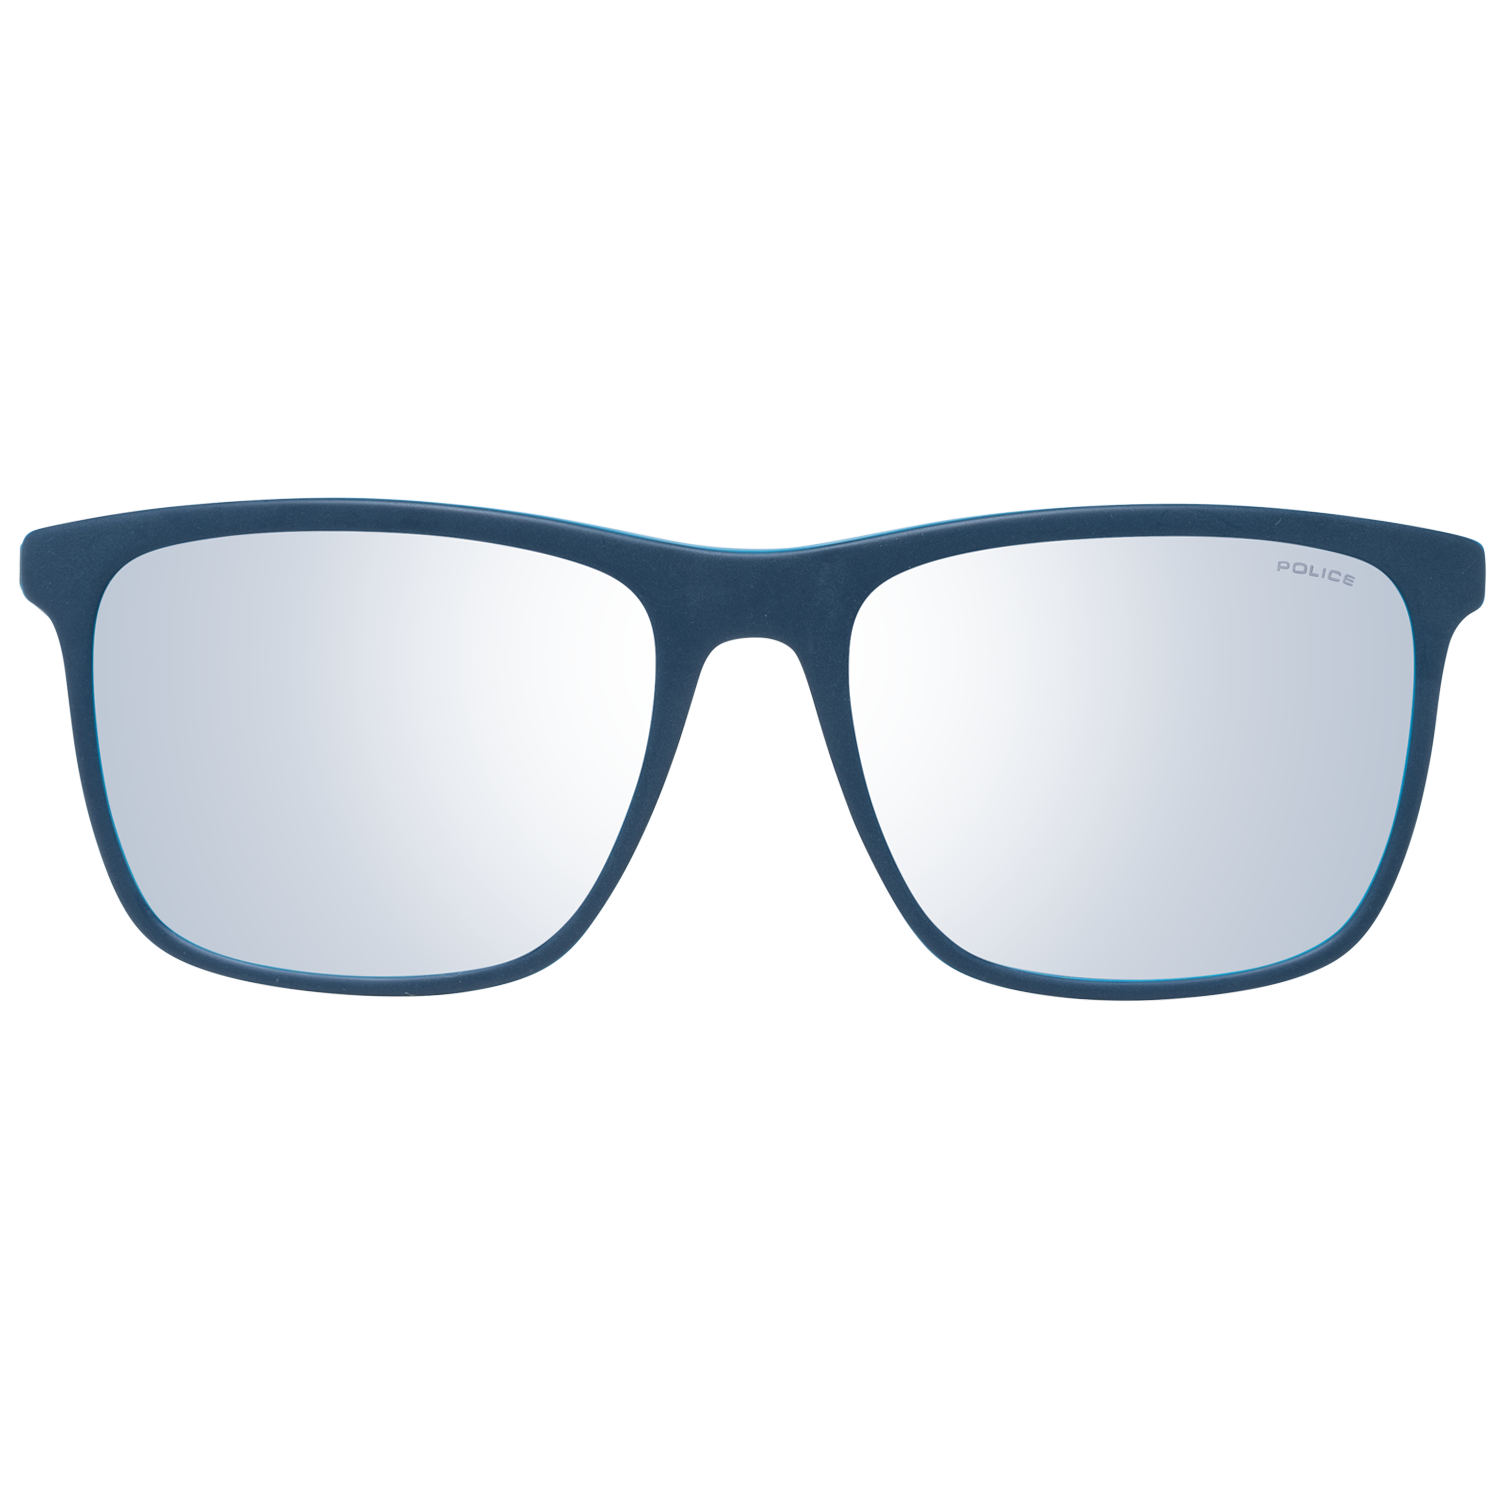 Police Sunglasses Police Sunglasses Men's SPLA56 WTRX 56 Eyeglasses Eyewear UK USA Australia 